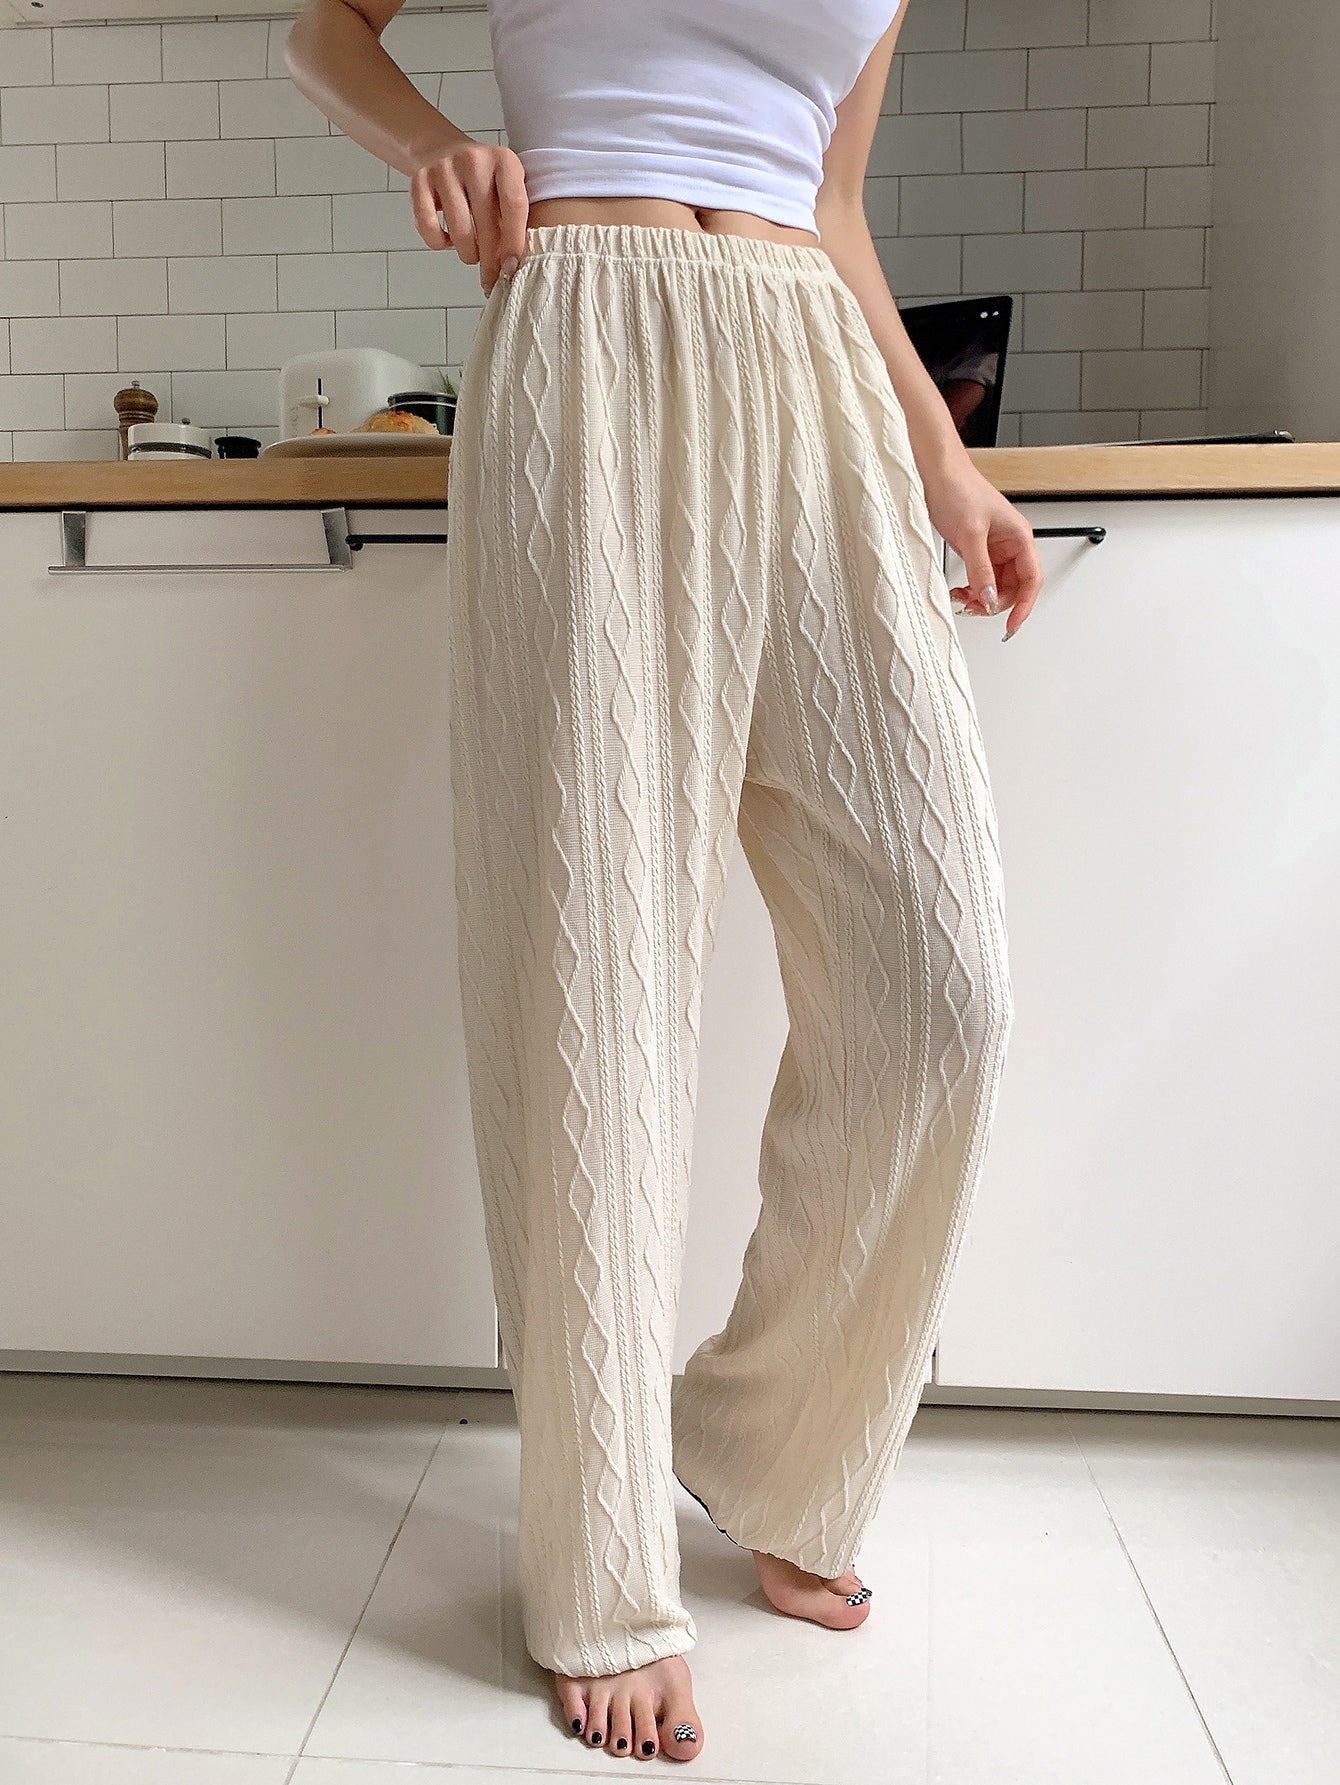 Textured Binding Trim Pajama Set